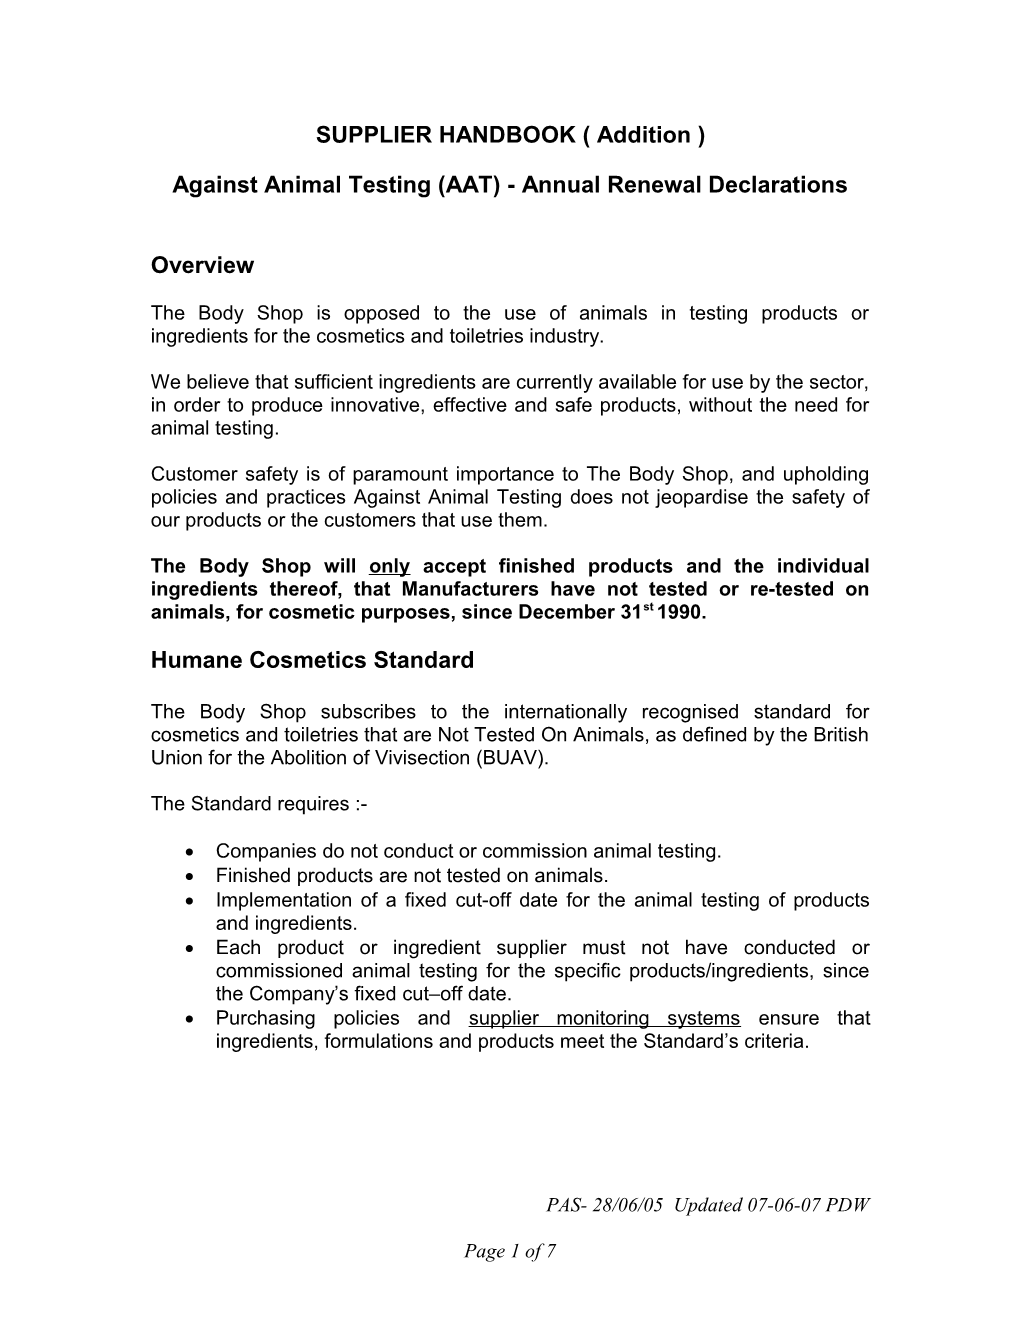 Against Animal Testing ( AAT)